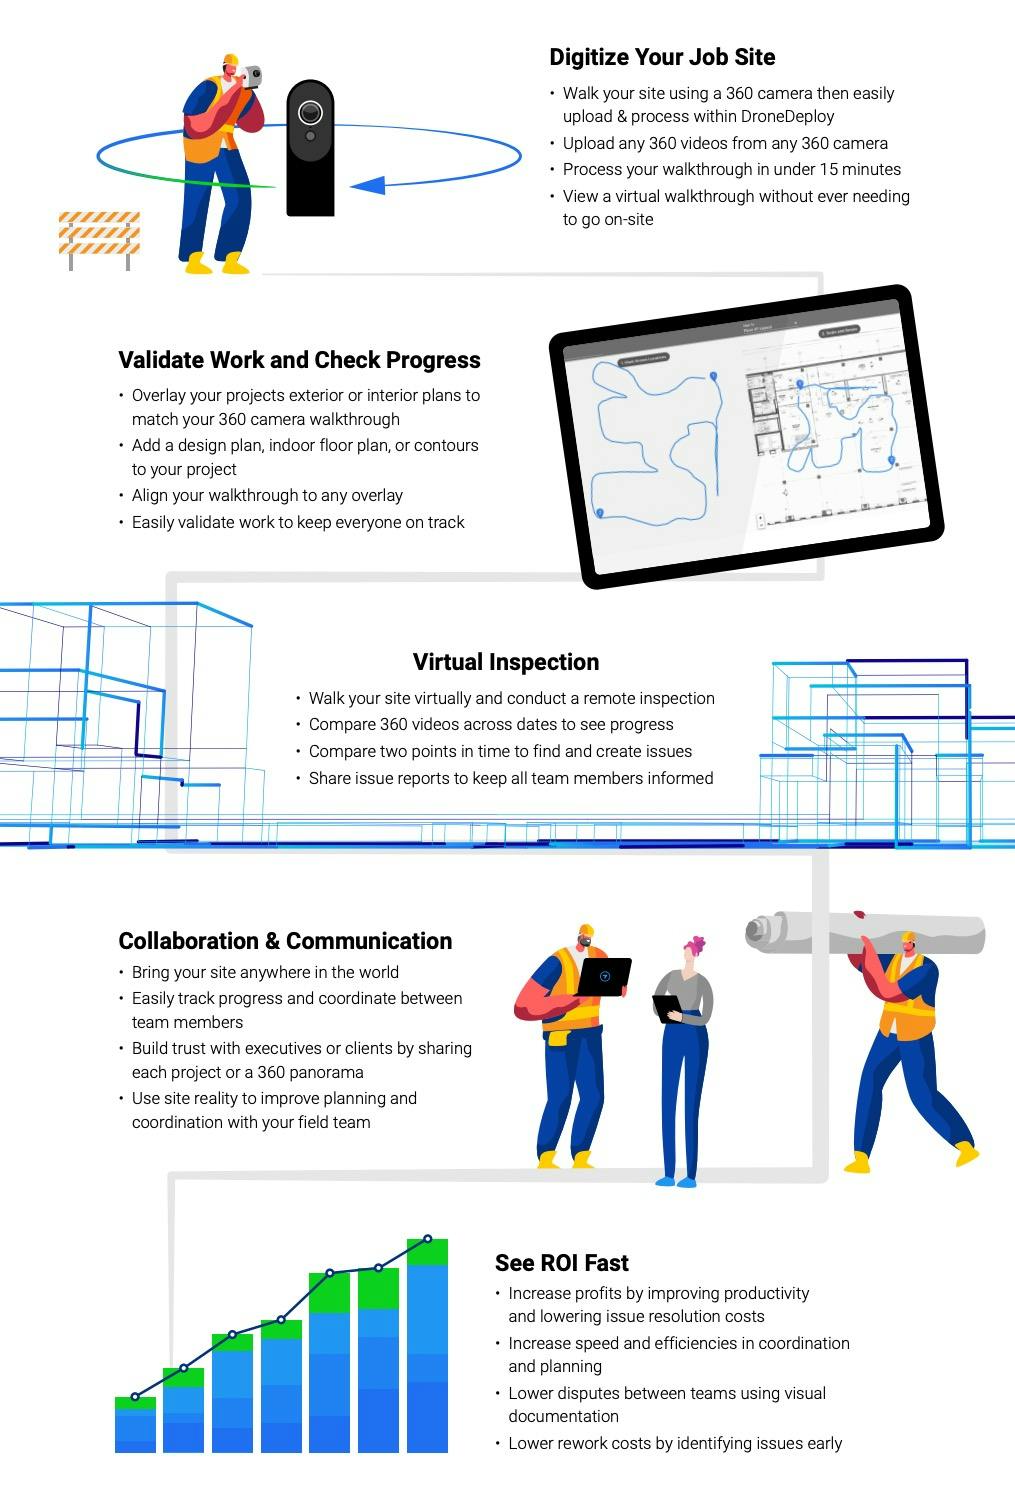 DroneDeploy 360 Virtual Walkthrough Infographic - create a virtual tour of your job site